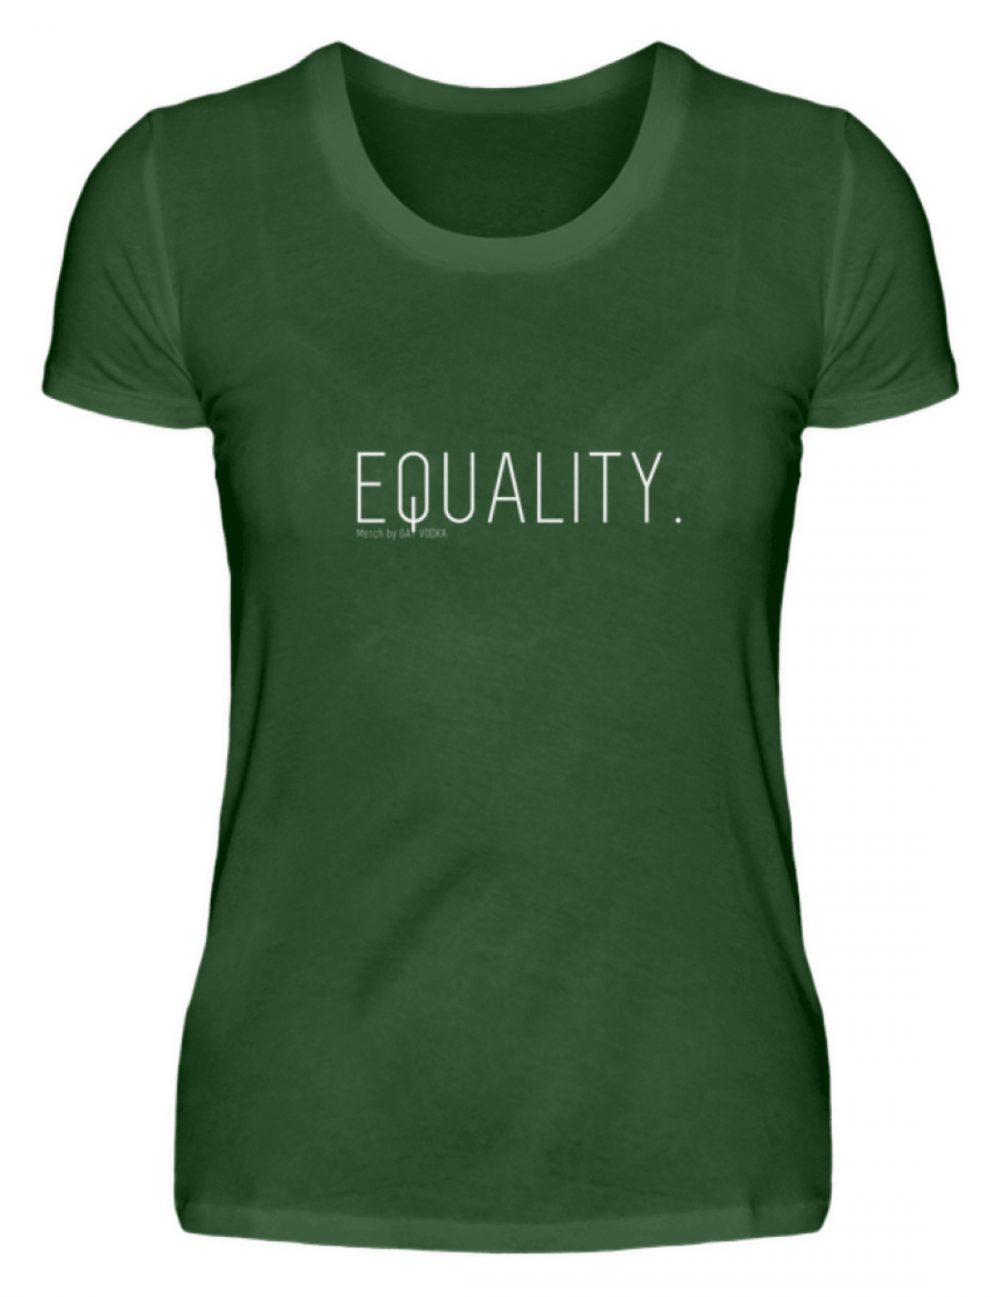 EQUALITY. - Damen Premiumshirt-2936